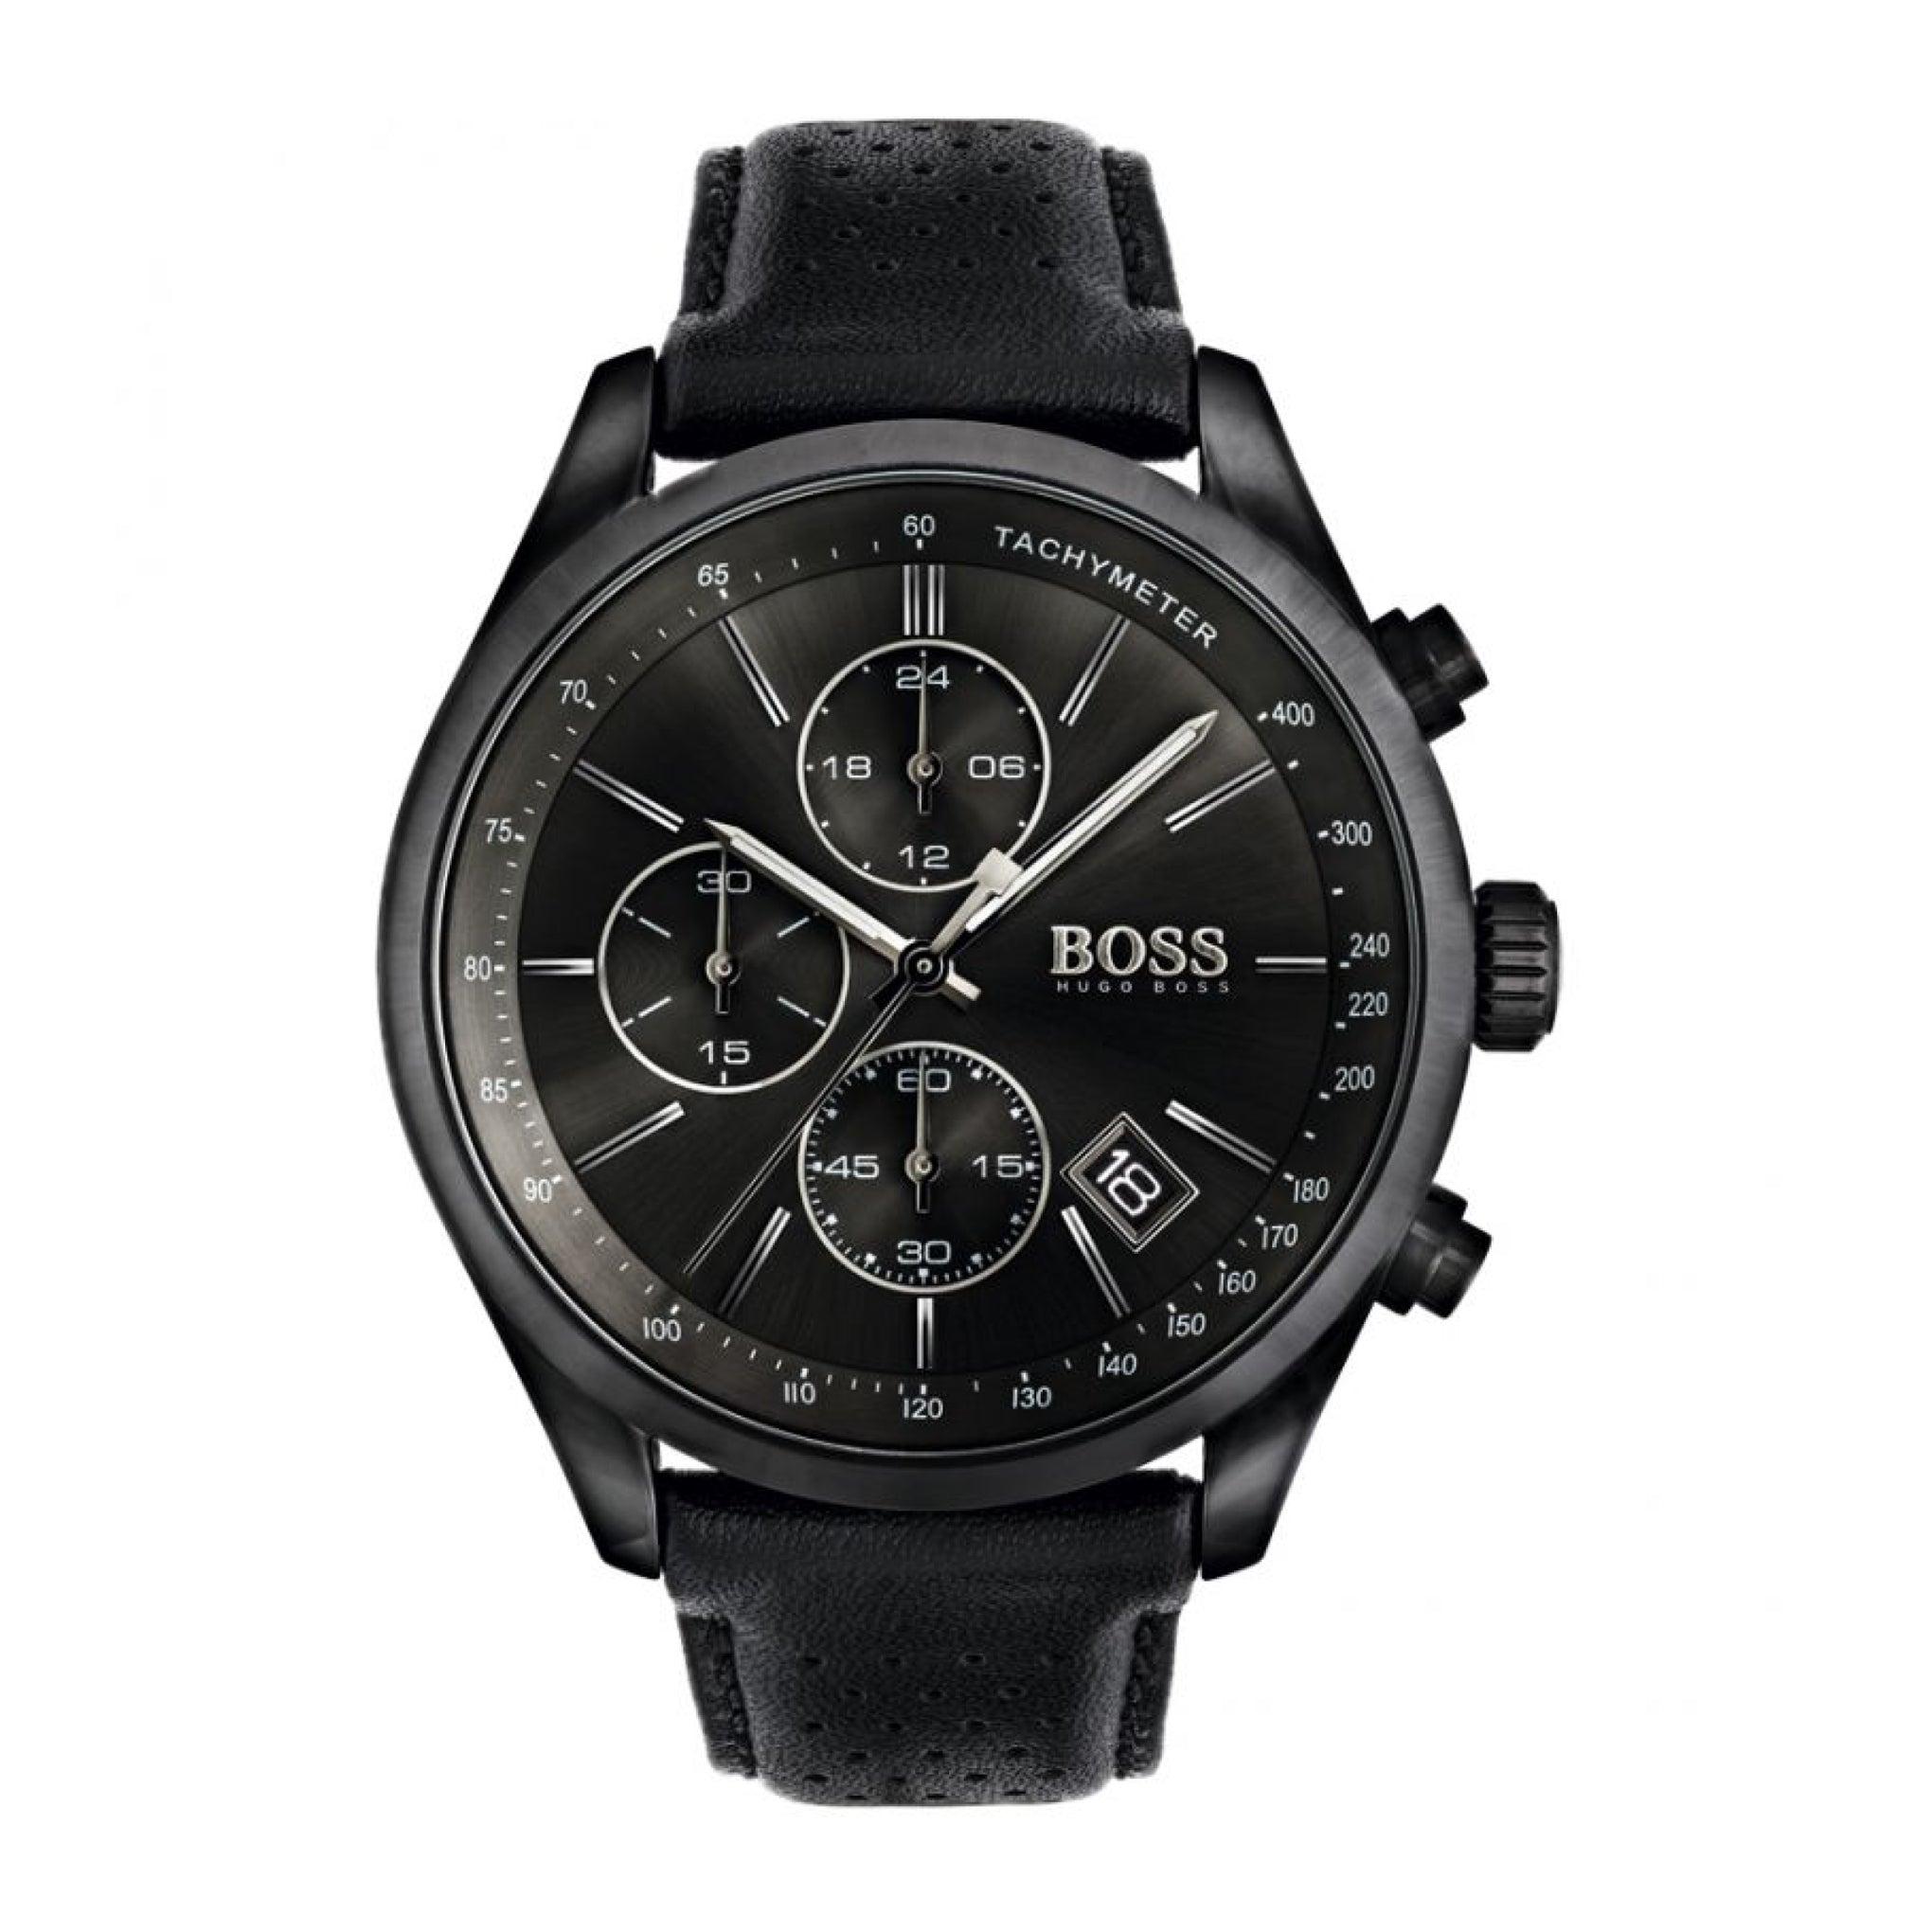 ساعة يد رجالية بسوار جلدي - أسود - بحزام معدني مقاوم للصدأ هوغو بوس Hugo Boss Men's Chronograph Quartz Black Leather Strap Watch